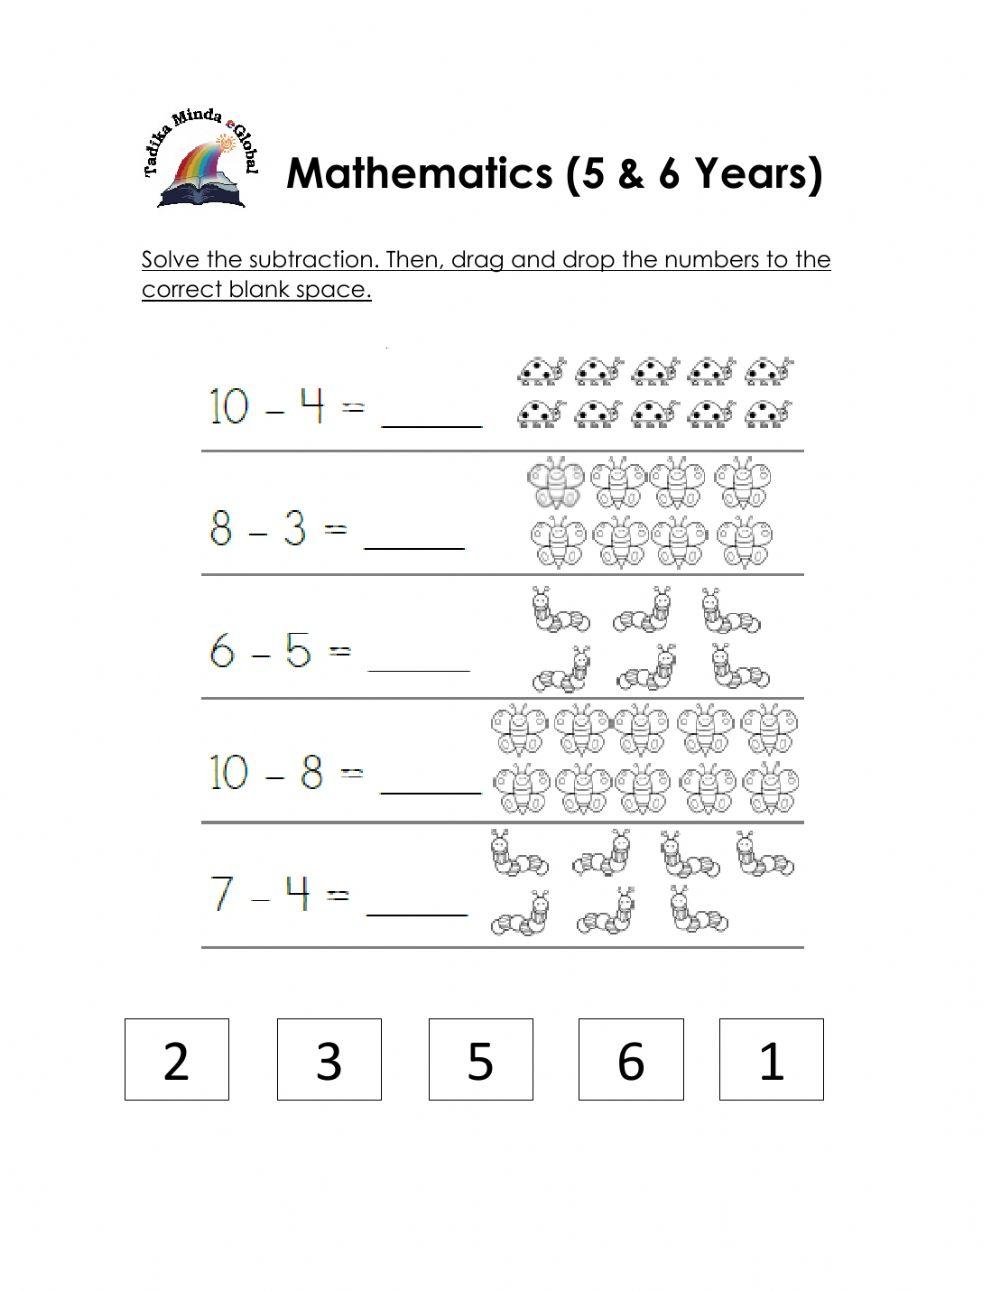 5 & 6 Years: Mathematics (Subtraction 1)